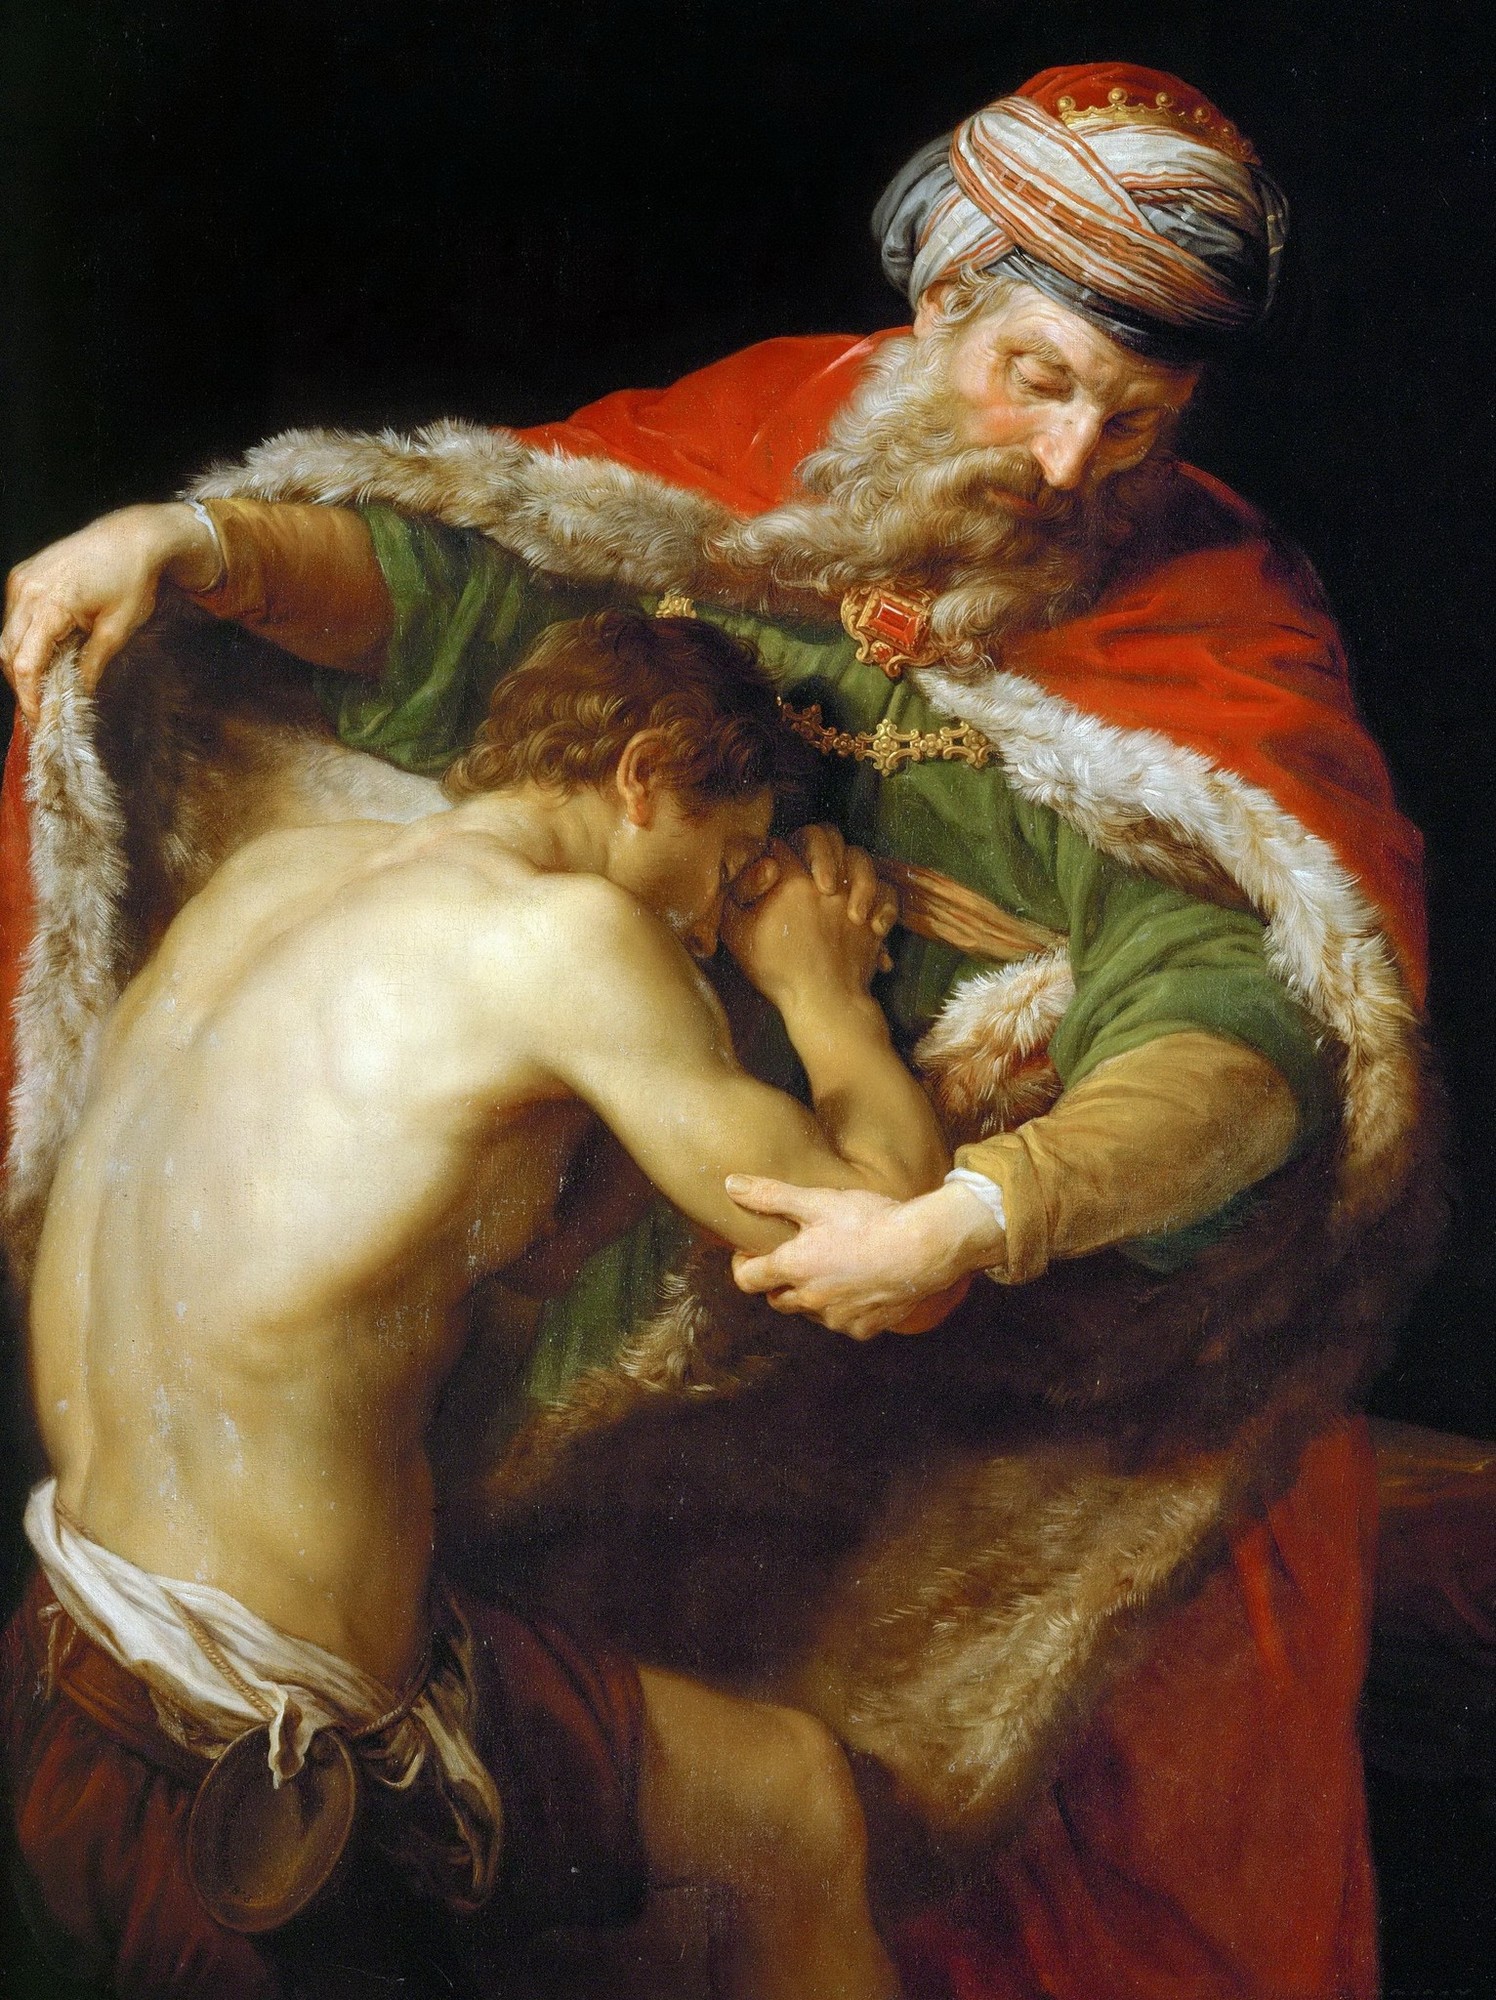 Pompeo Girolamo Batoni.  Le retour du fils prodigue.  1773 année.  Toile, huile